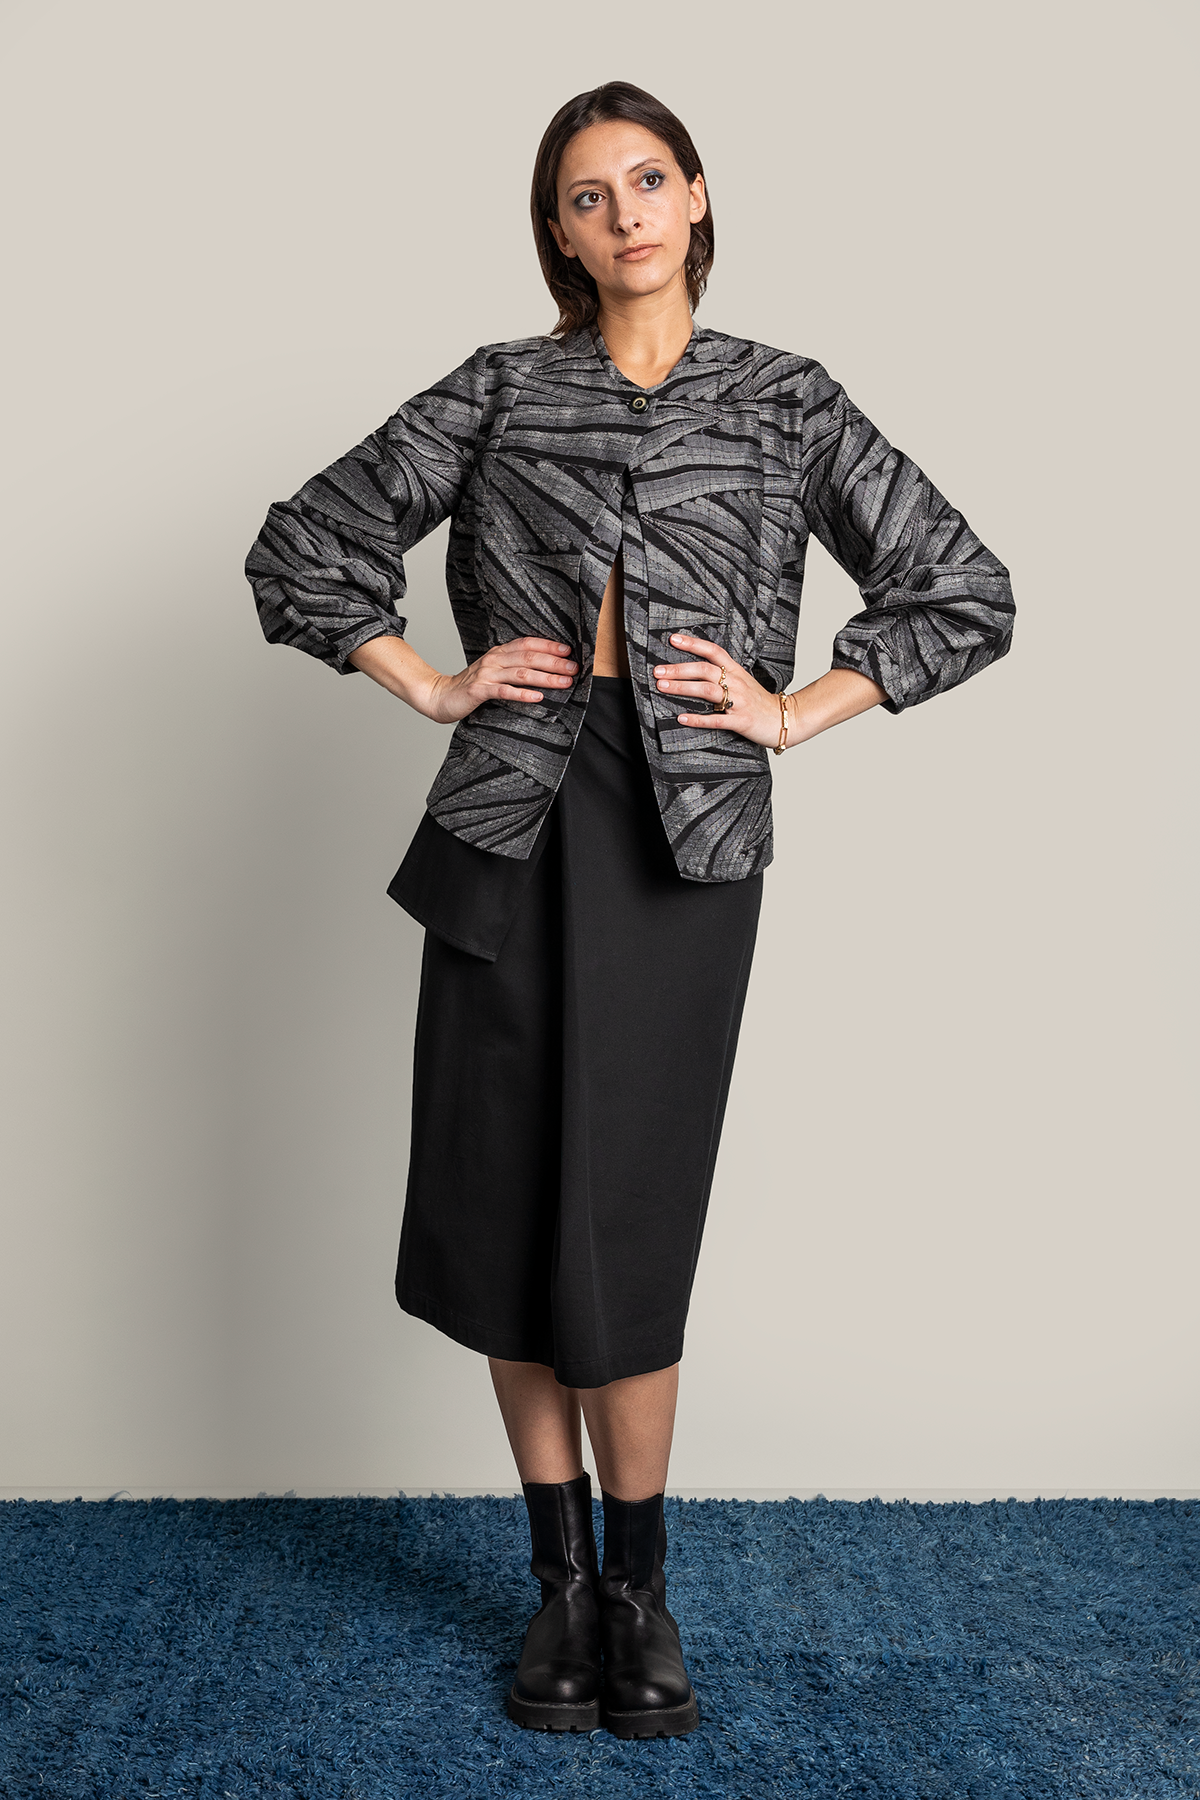 Peplum Skirt in Black Heavy Cotton